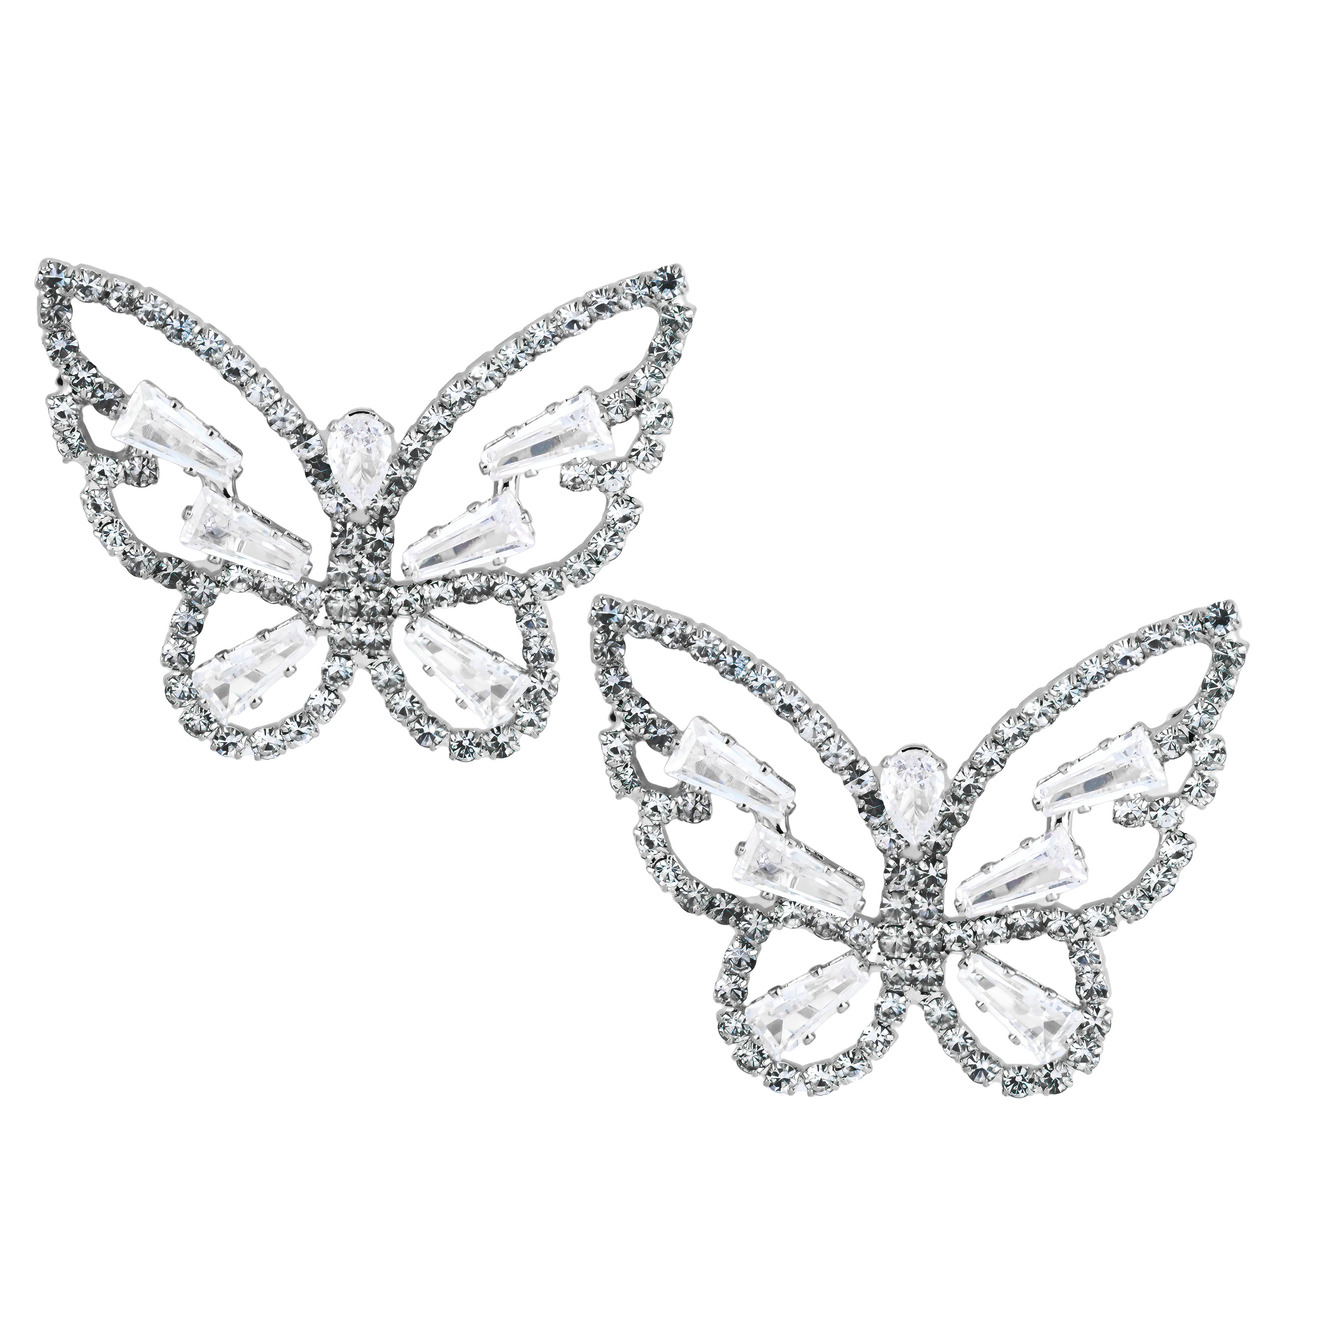 Herald Percy Серебристые серьги-бабочки с кристаллами herald percy серебристые серьги крылья бабочки с кристаллами